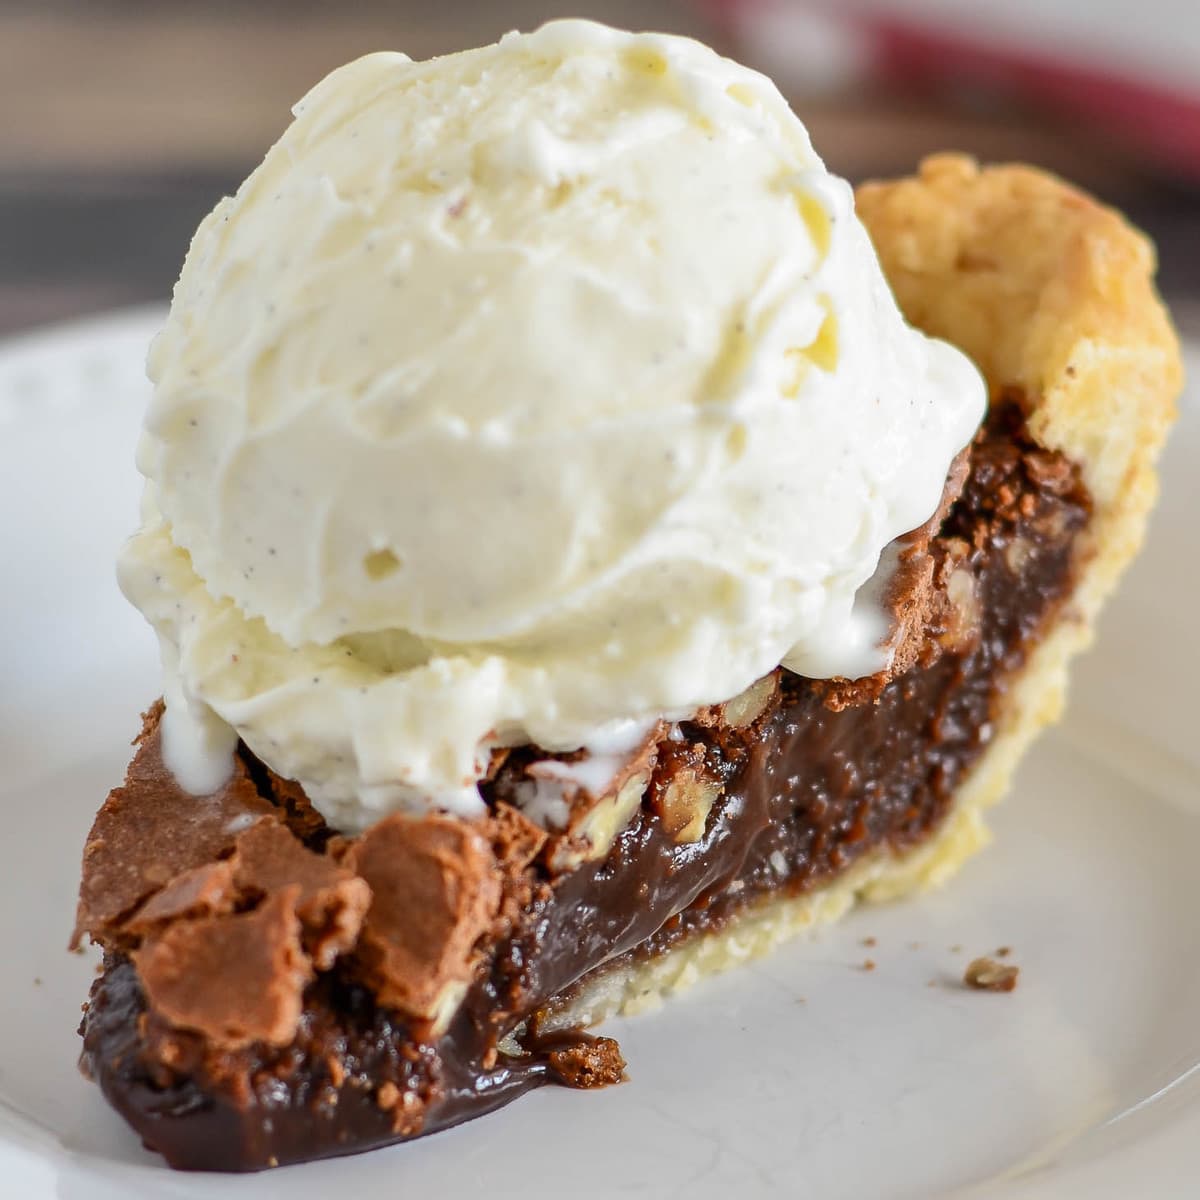 Fall dessert recipes - chocolate pecan pie topped with vanilla ice cream.